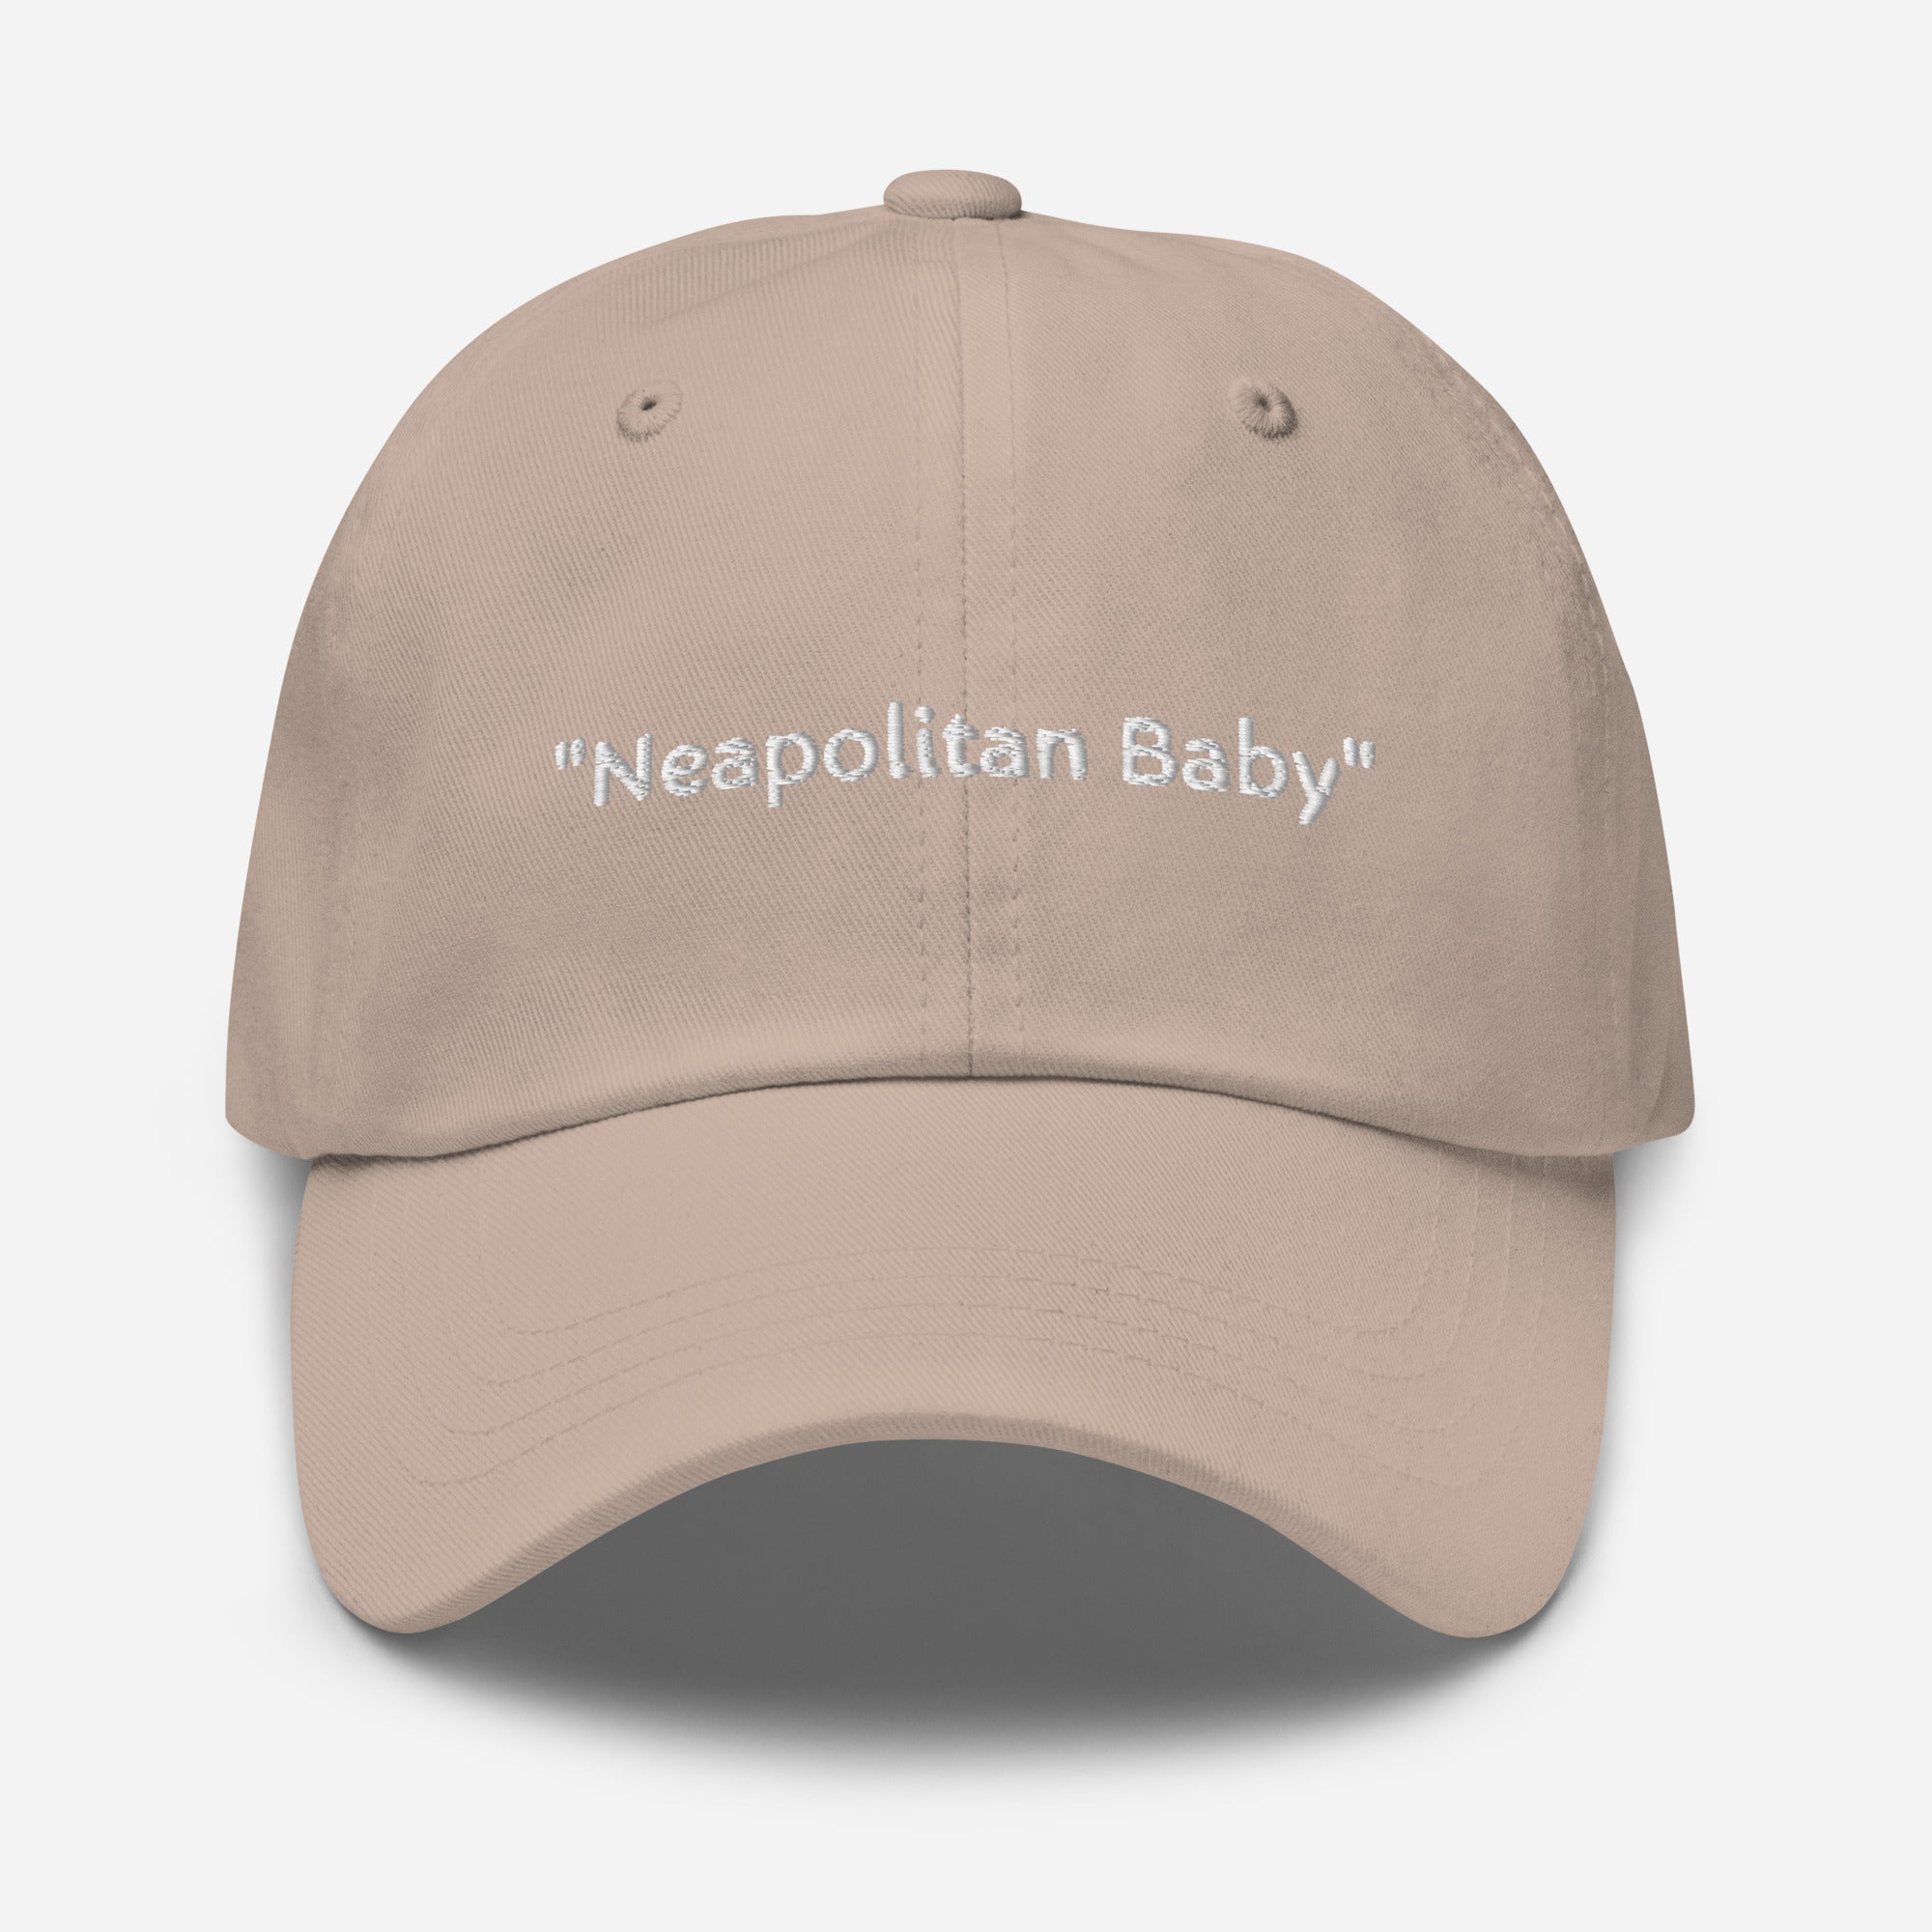 "Neapolitan Baby" hat